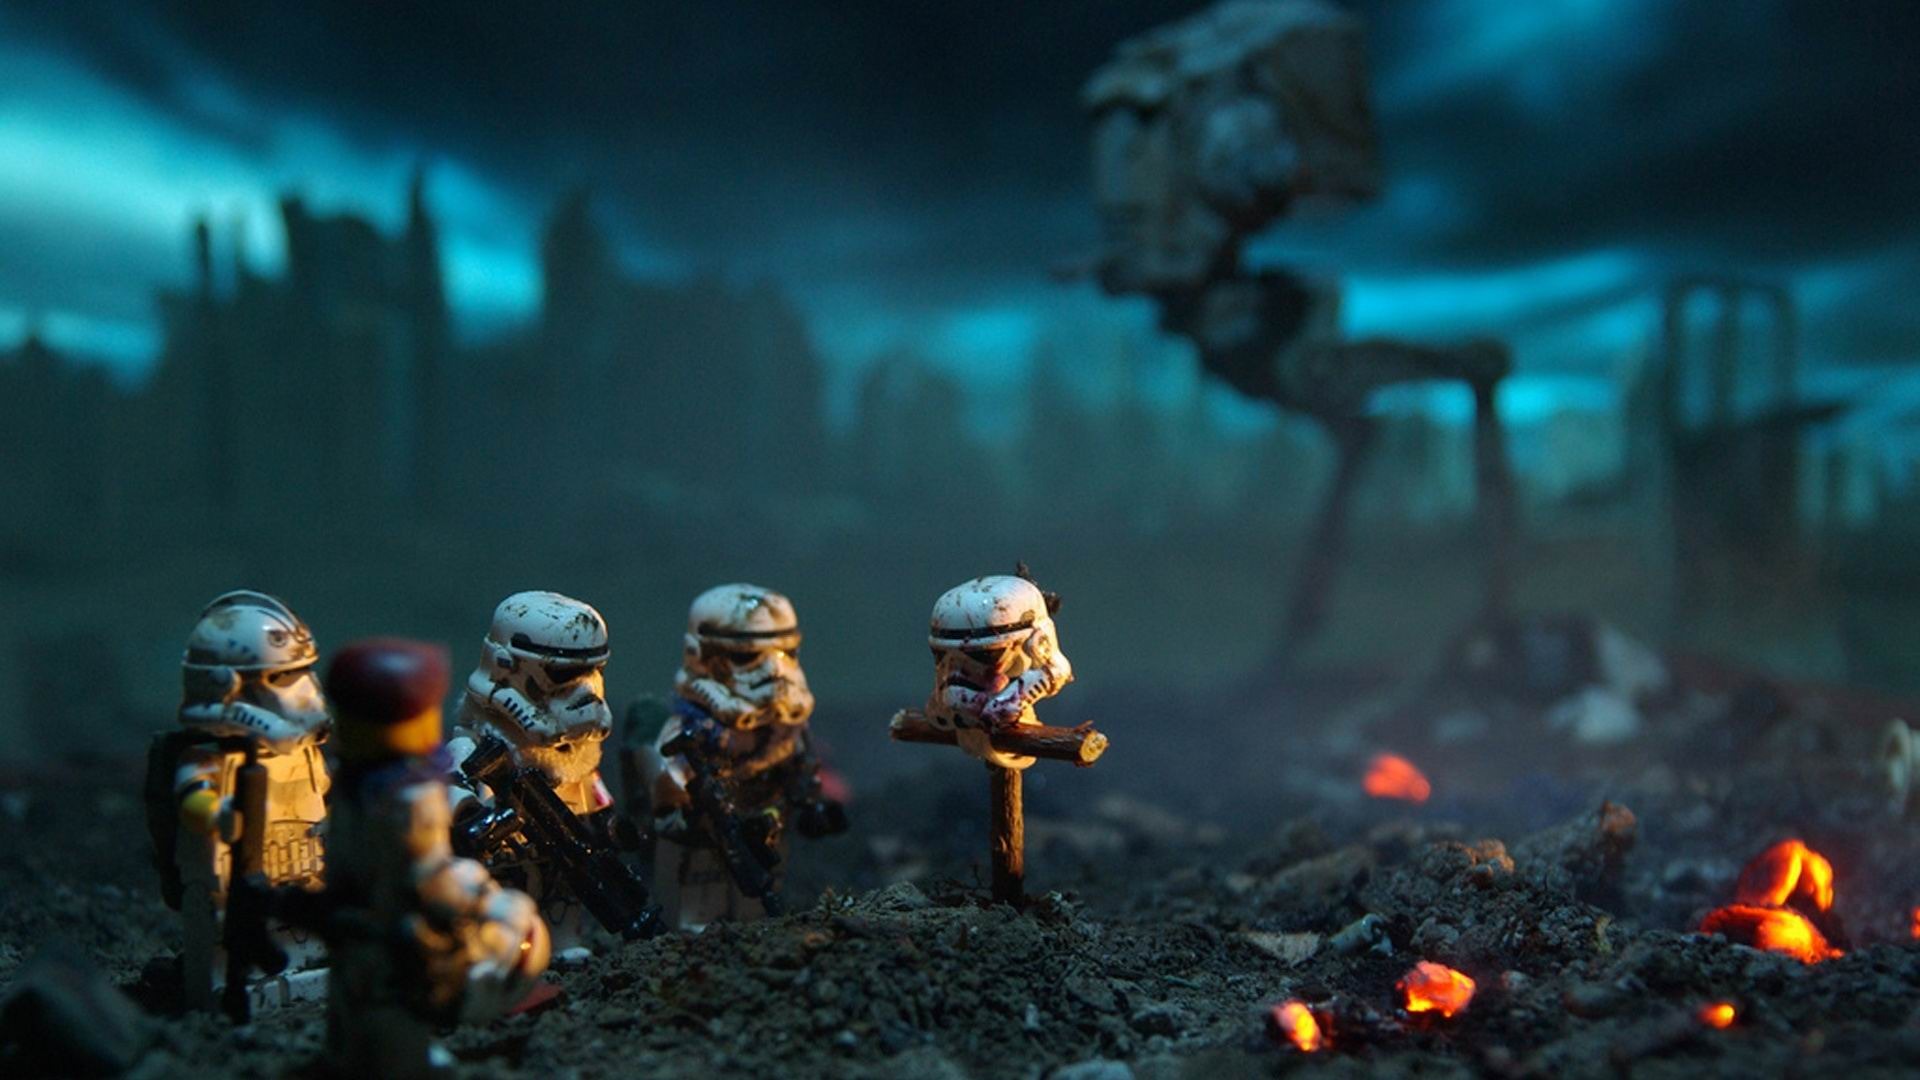 Cool Star Wars Lego Wallpaper HD 425 Backgrounds For Dekstop